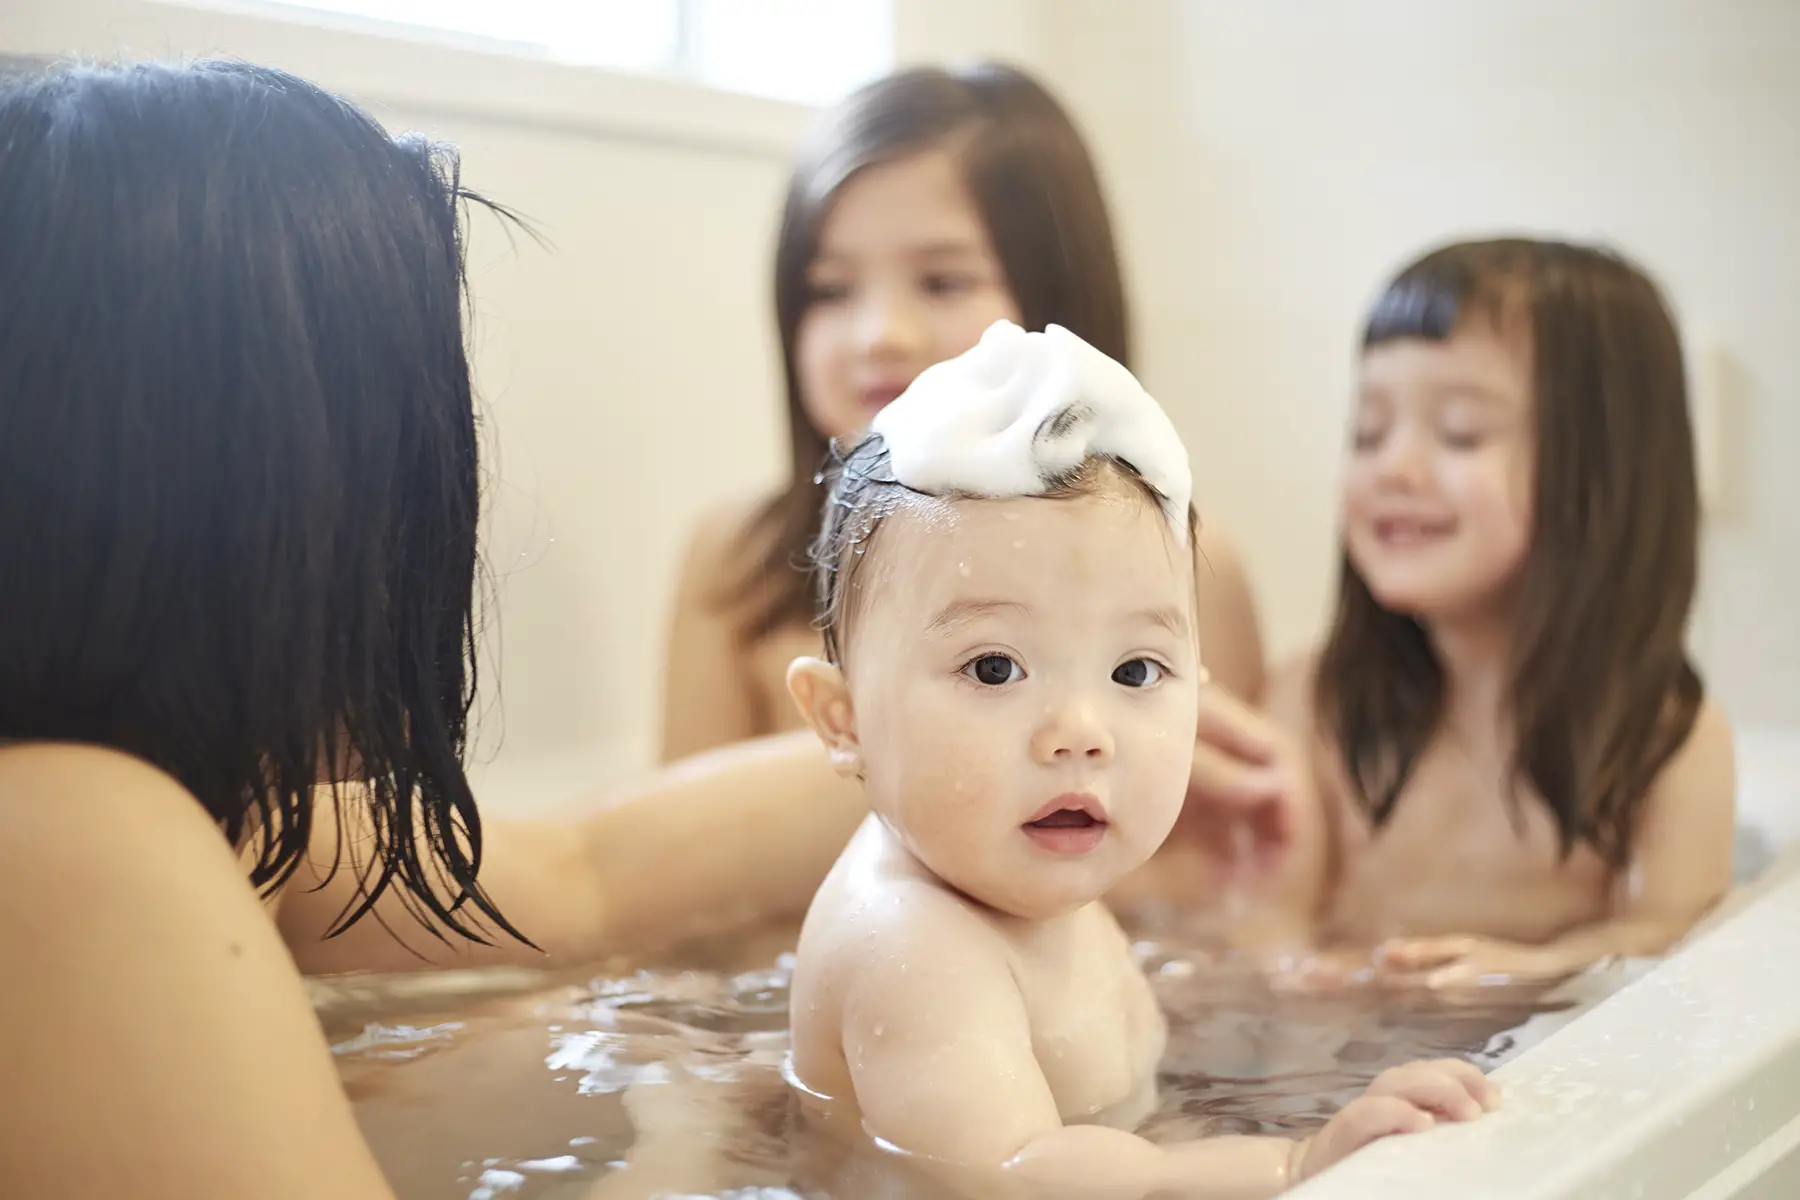 Children in bath, baby has bubble bath on their head